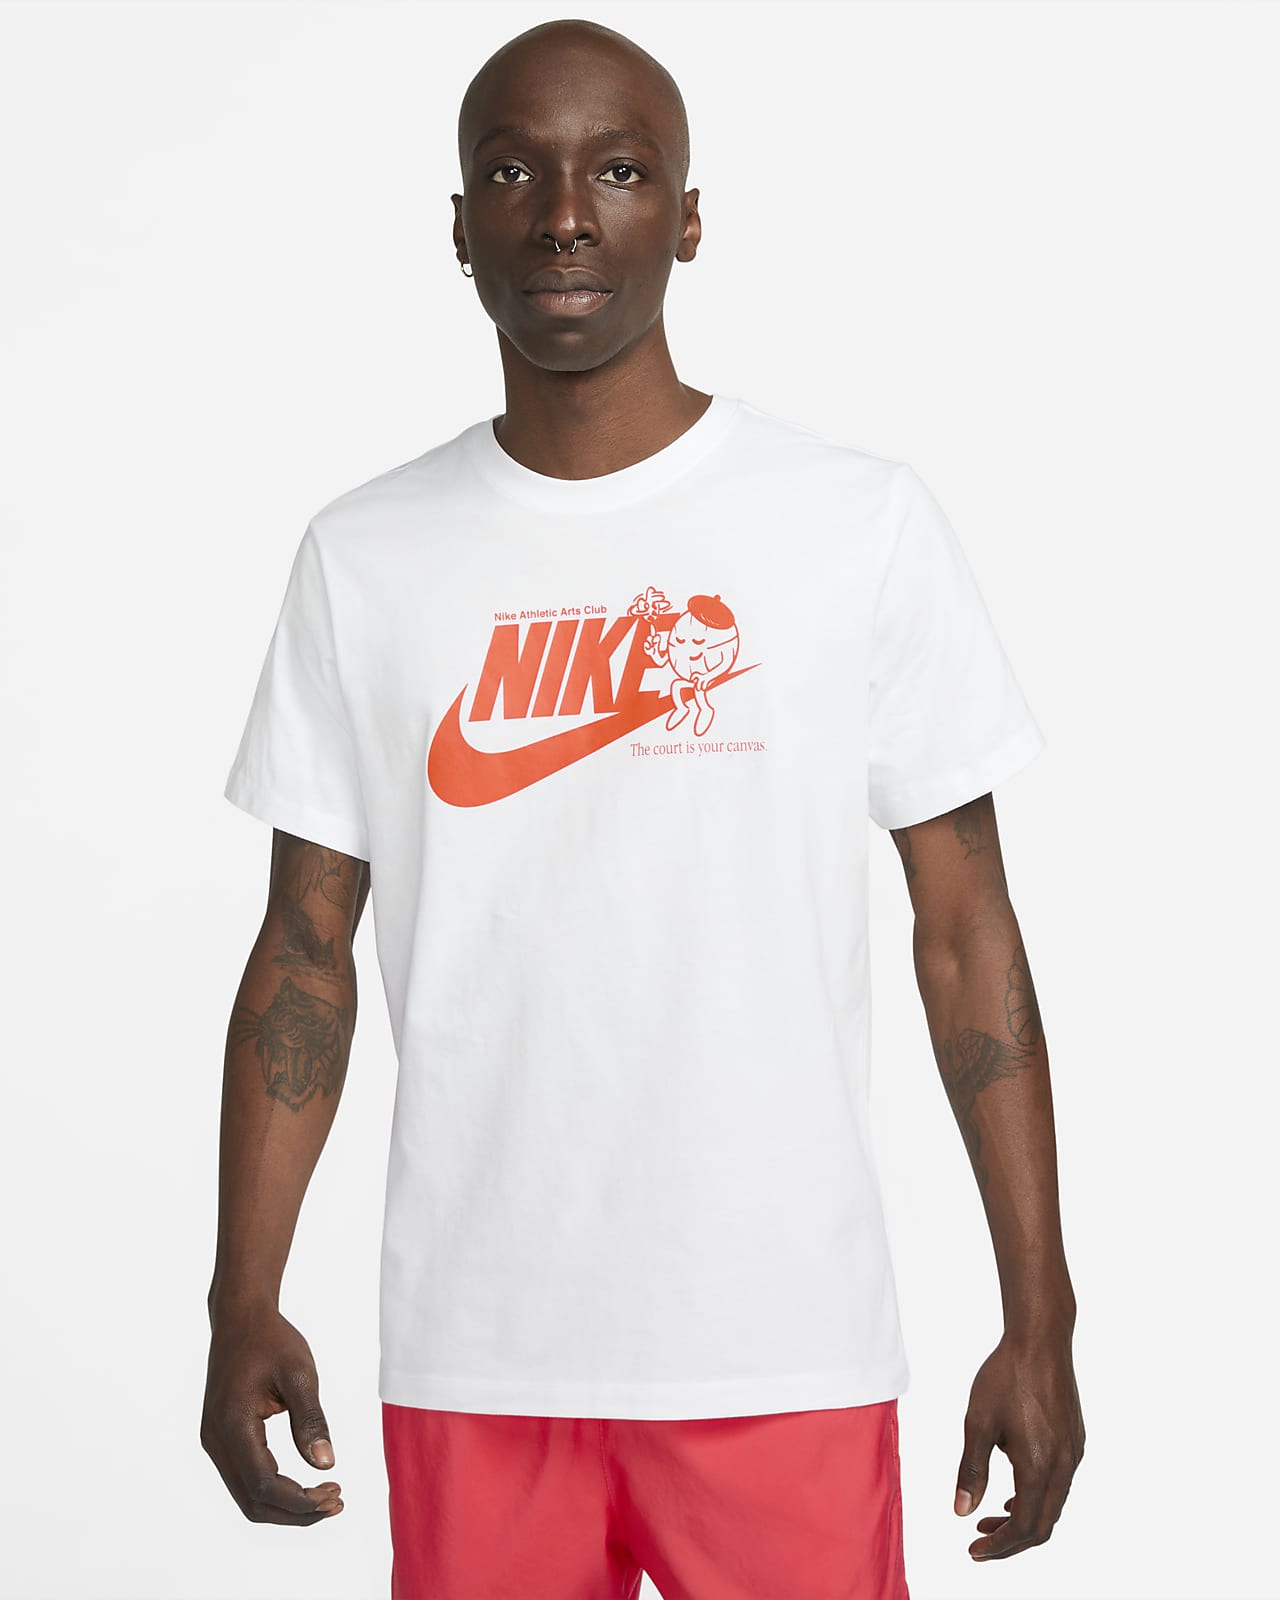 T-Shirt Nike Sportswear 100% Coton pour Homme - AR5004-549 - Bleu Marine &  Blanc